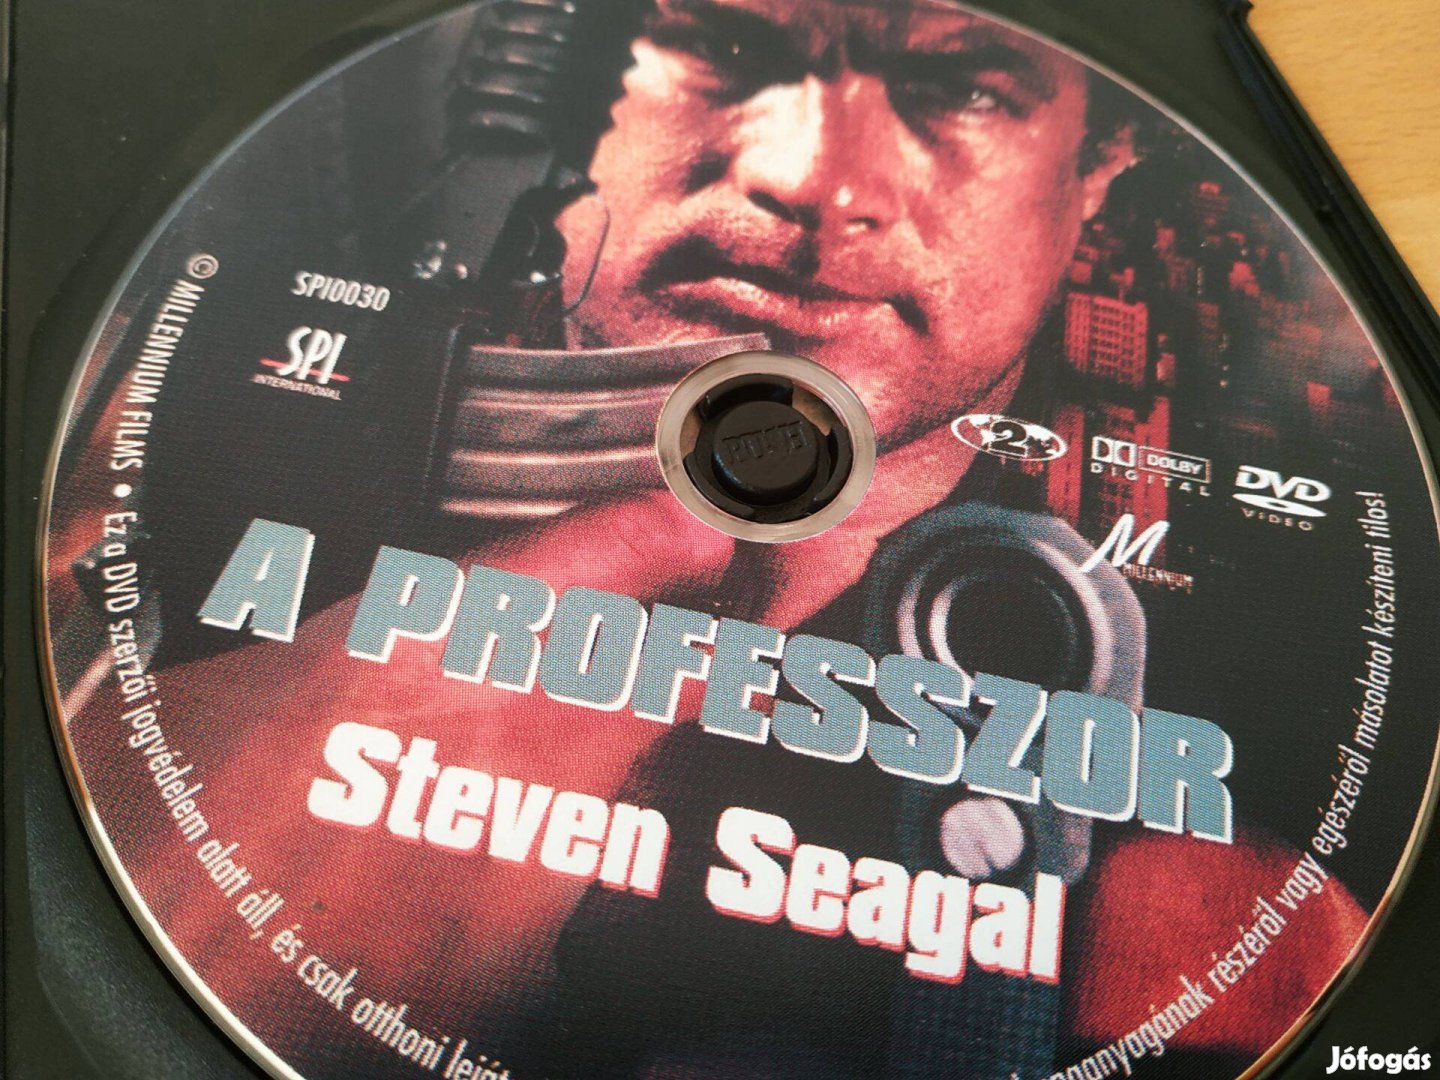 Steven Seagal - A professzor (amerikai akciófilm, SPI, 86p, 2003)